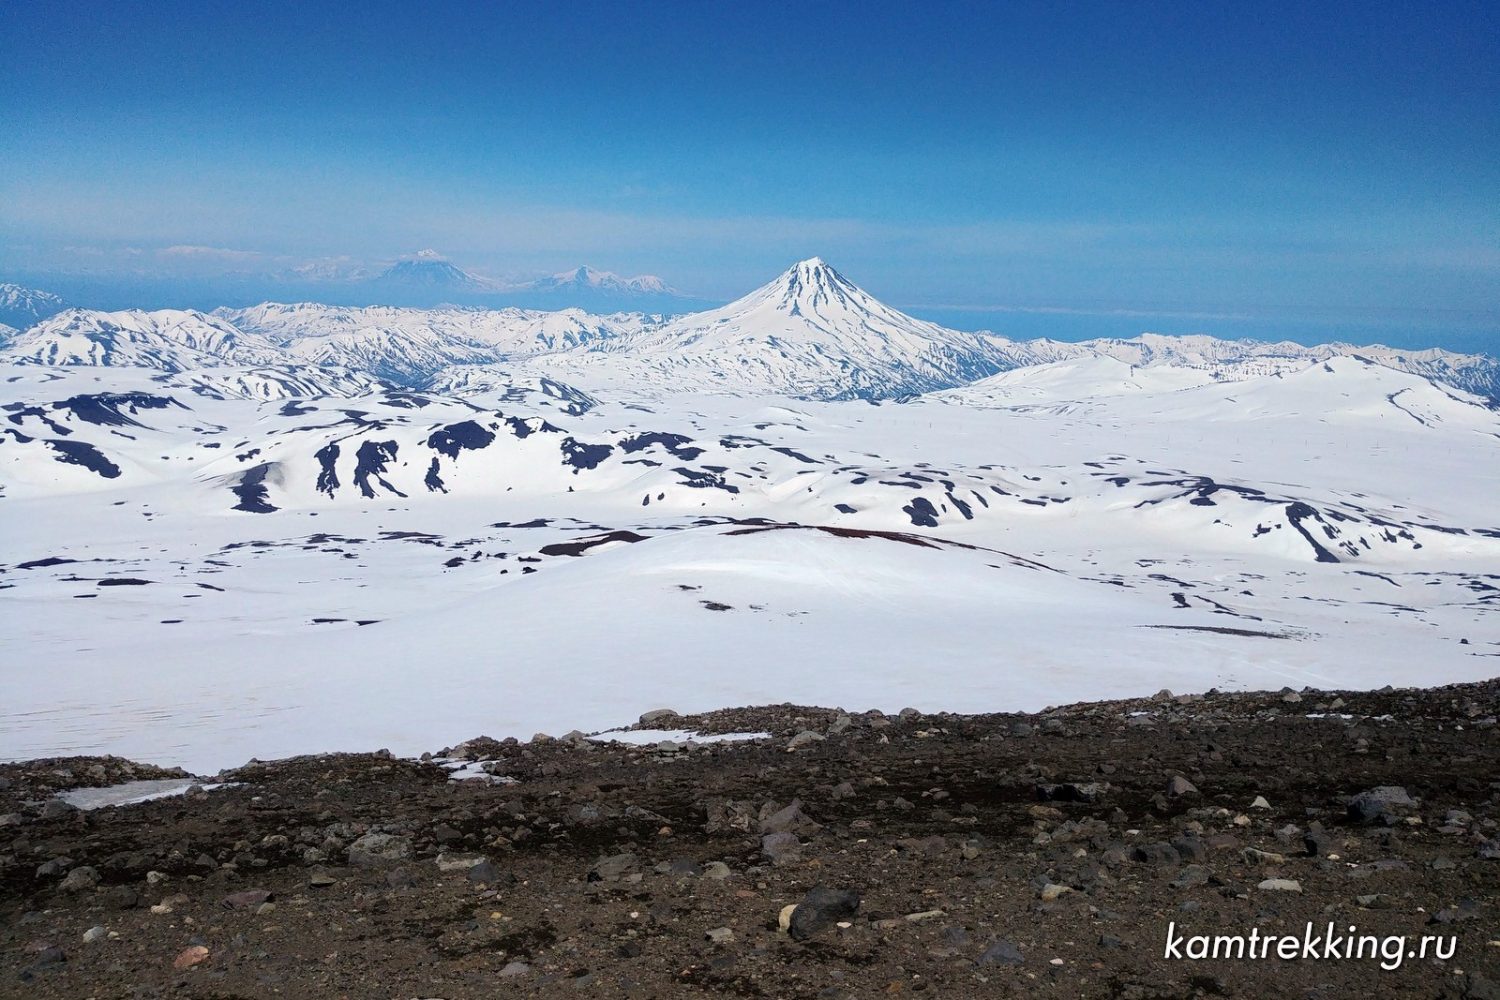 Камчатка тур 2020, экскурсия в кратер вулкана Горелый